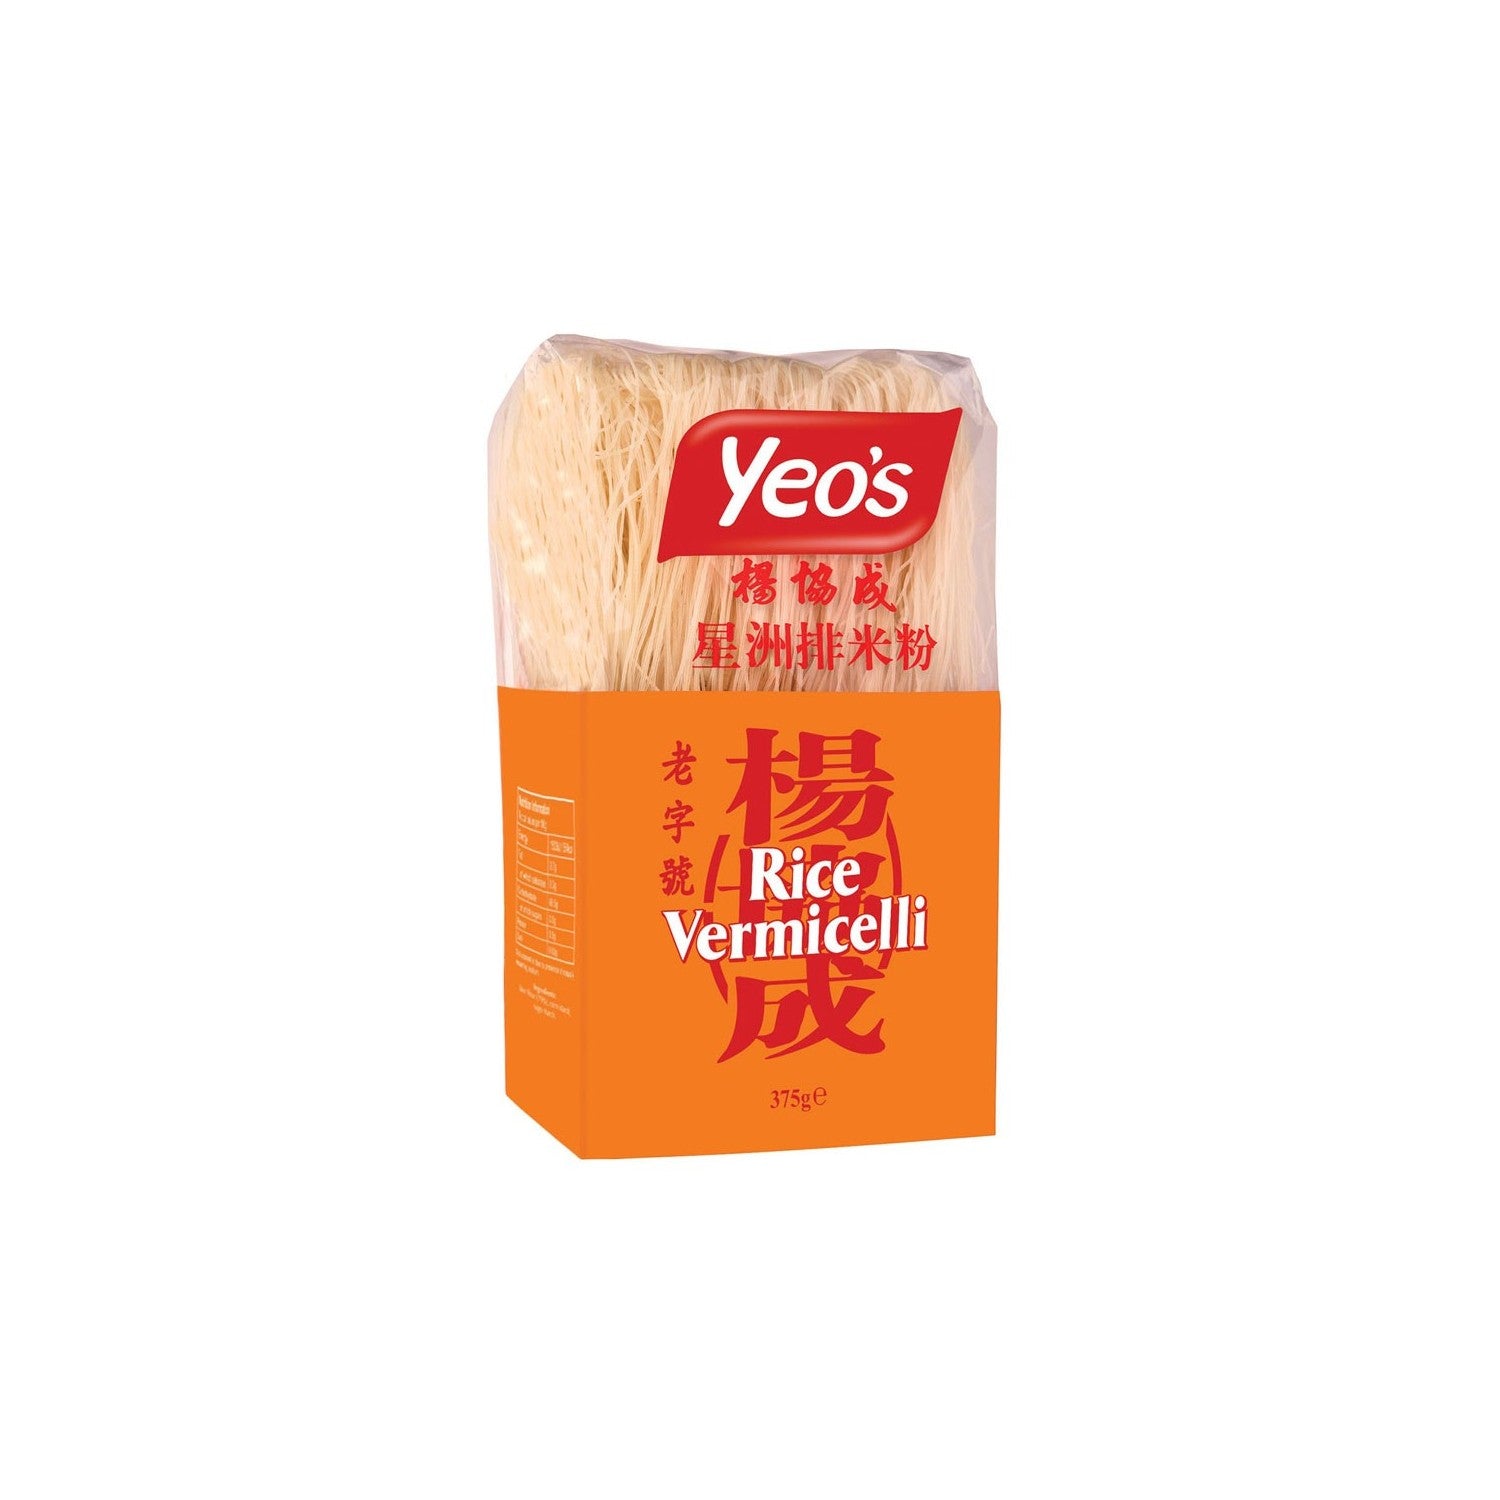 Yeo's rice vermicelli 375g